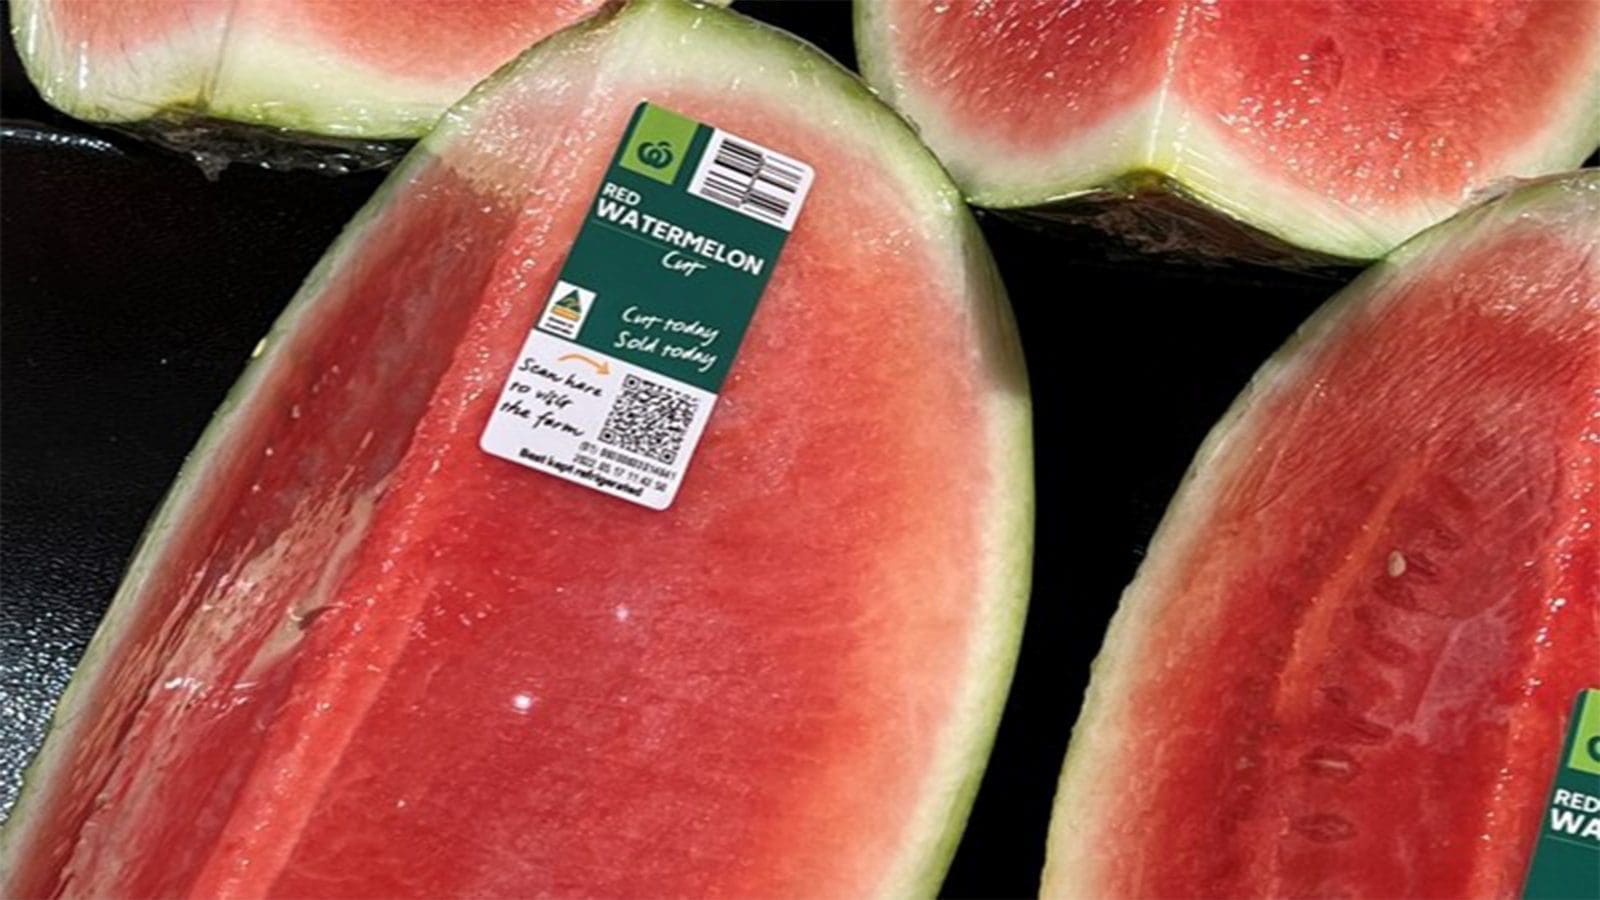 Australia’s melon industry strives to achieve farm to fork traceability